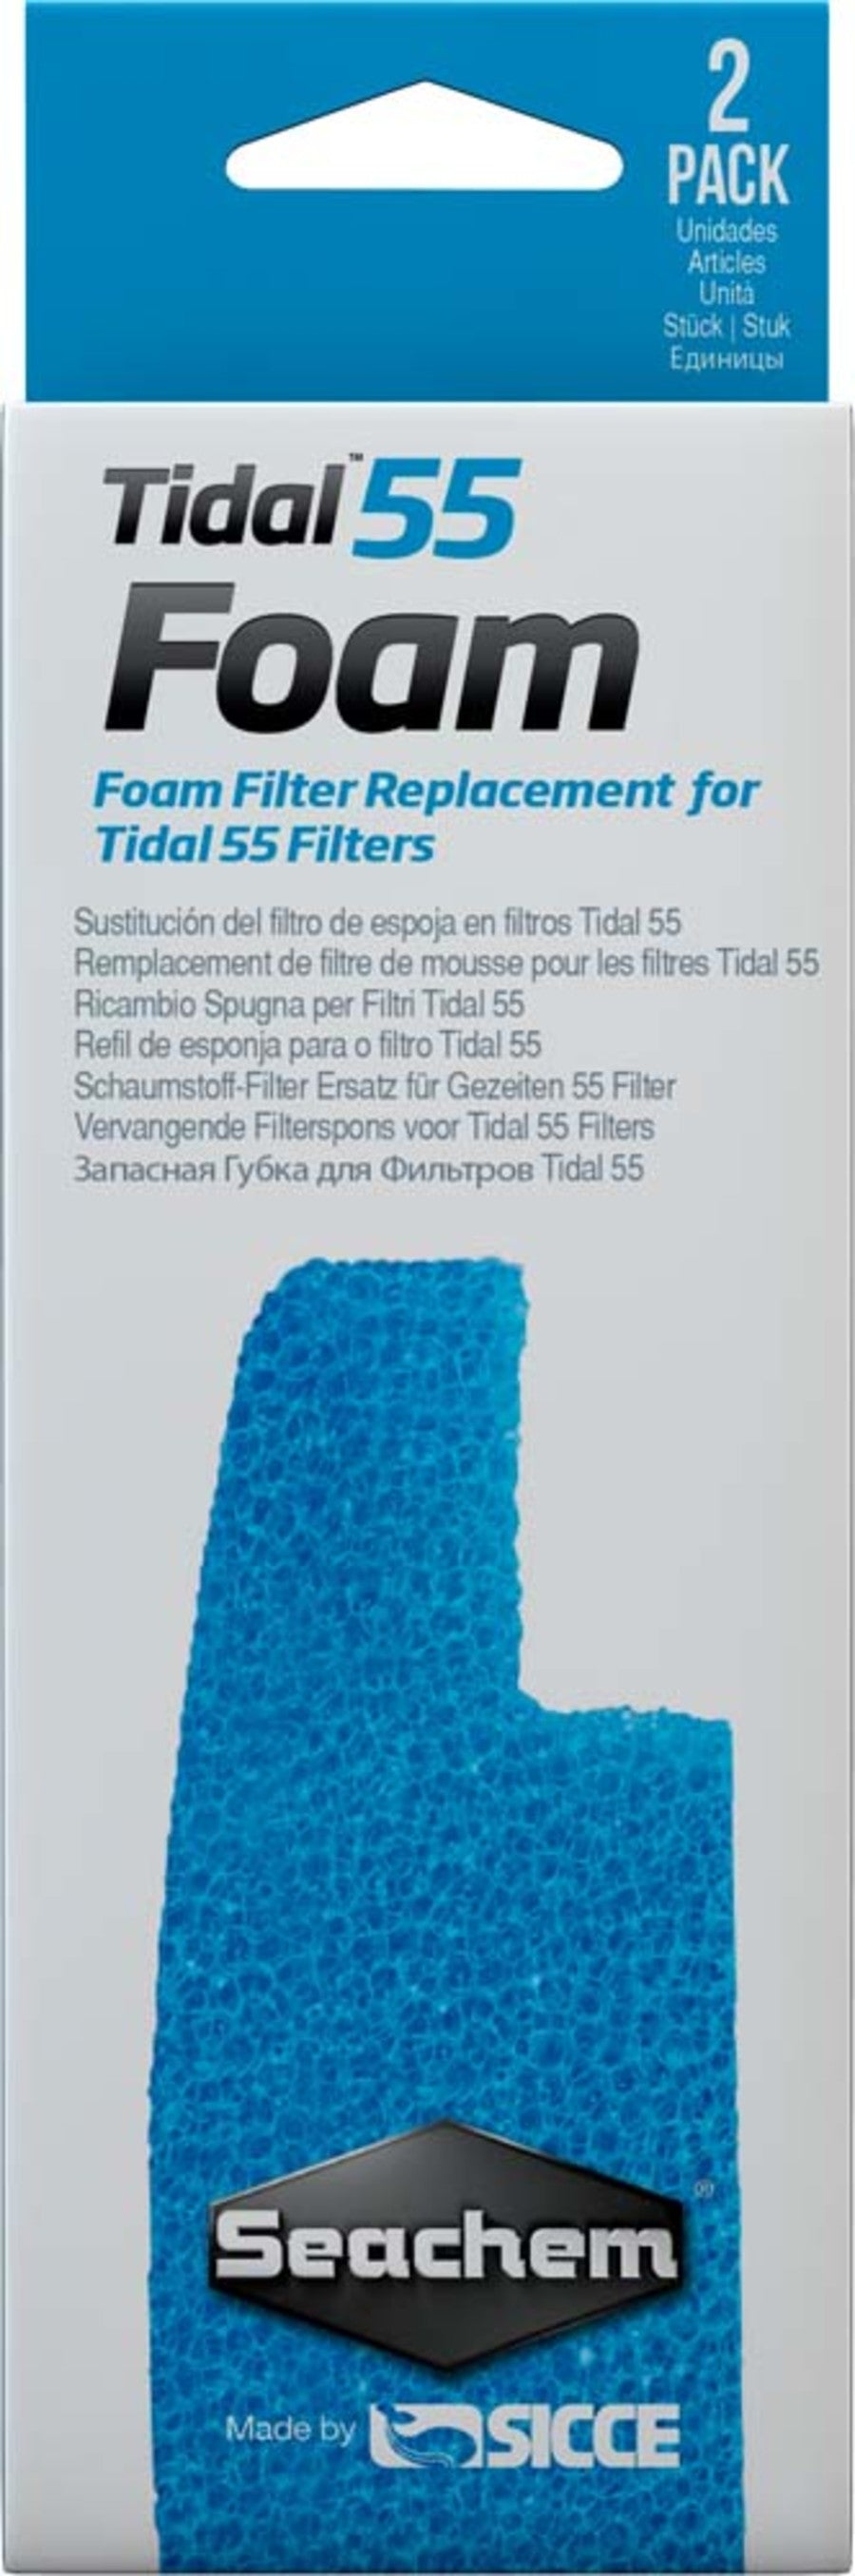 Seachem Laboratories Tidel Foam Sponge For Tidal 55 Filters, Blue, 1ea/2 pk